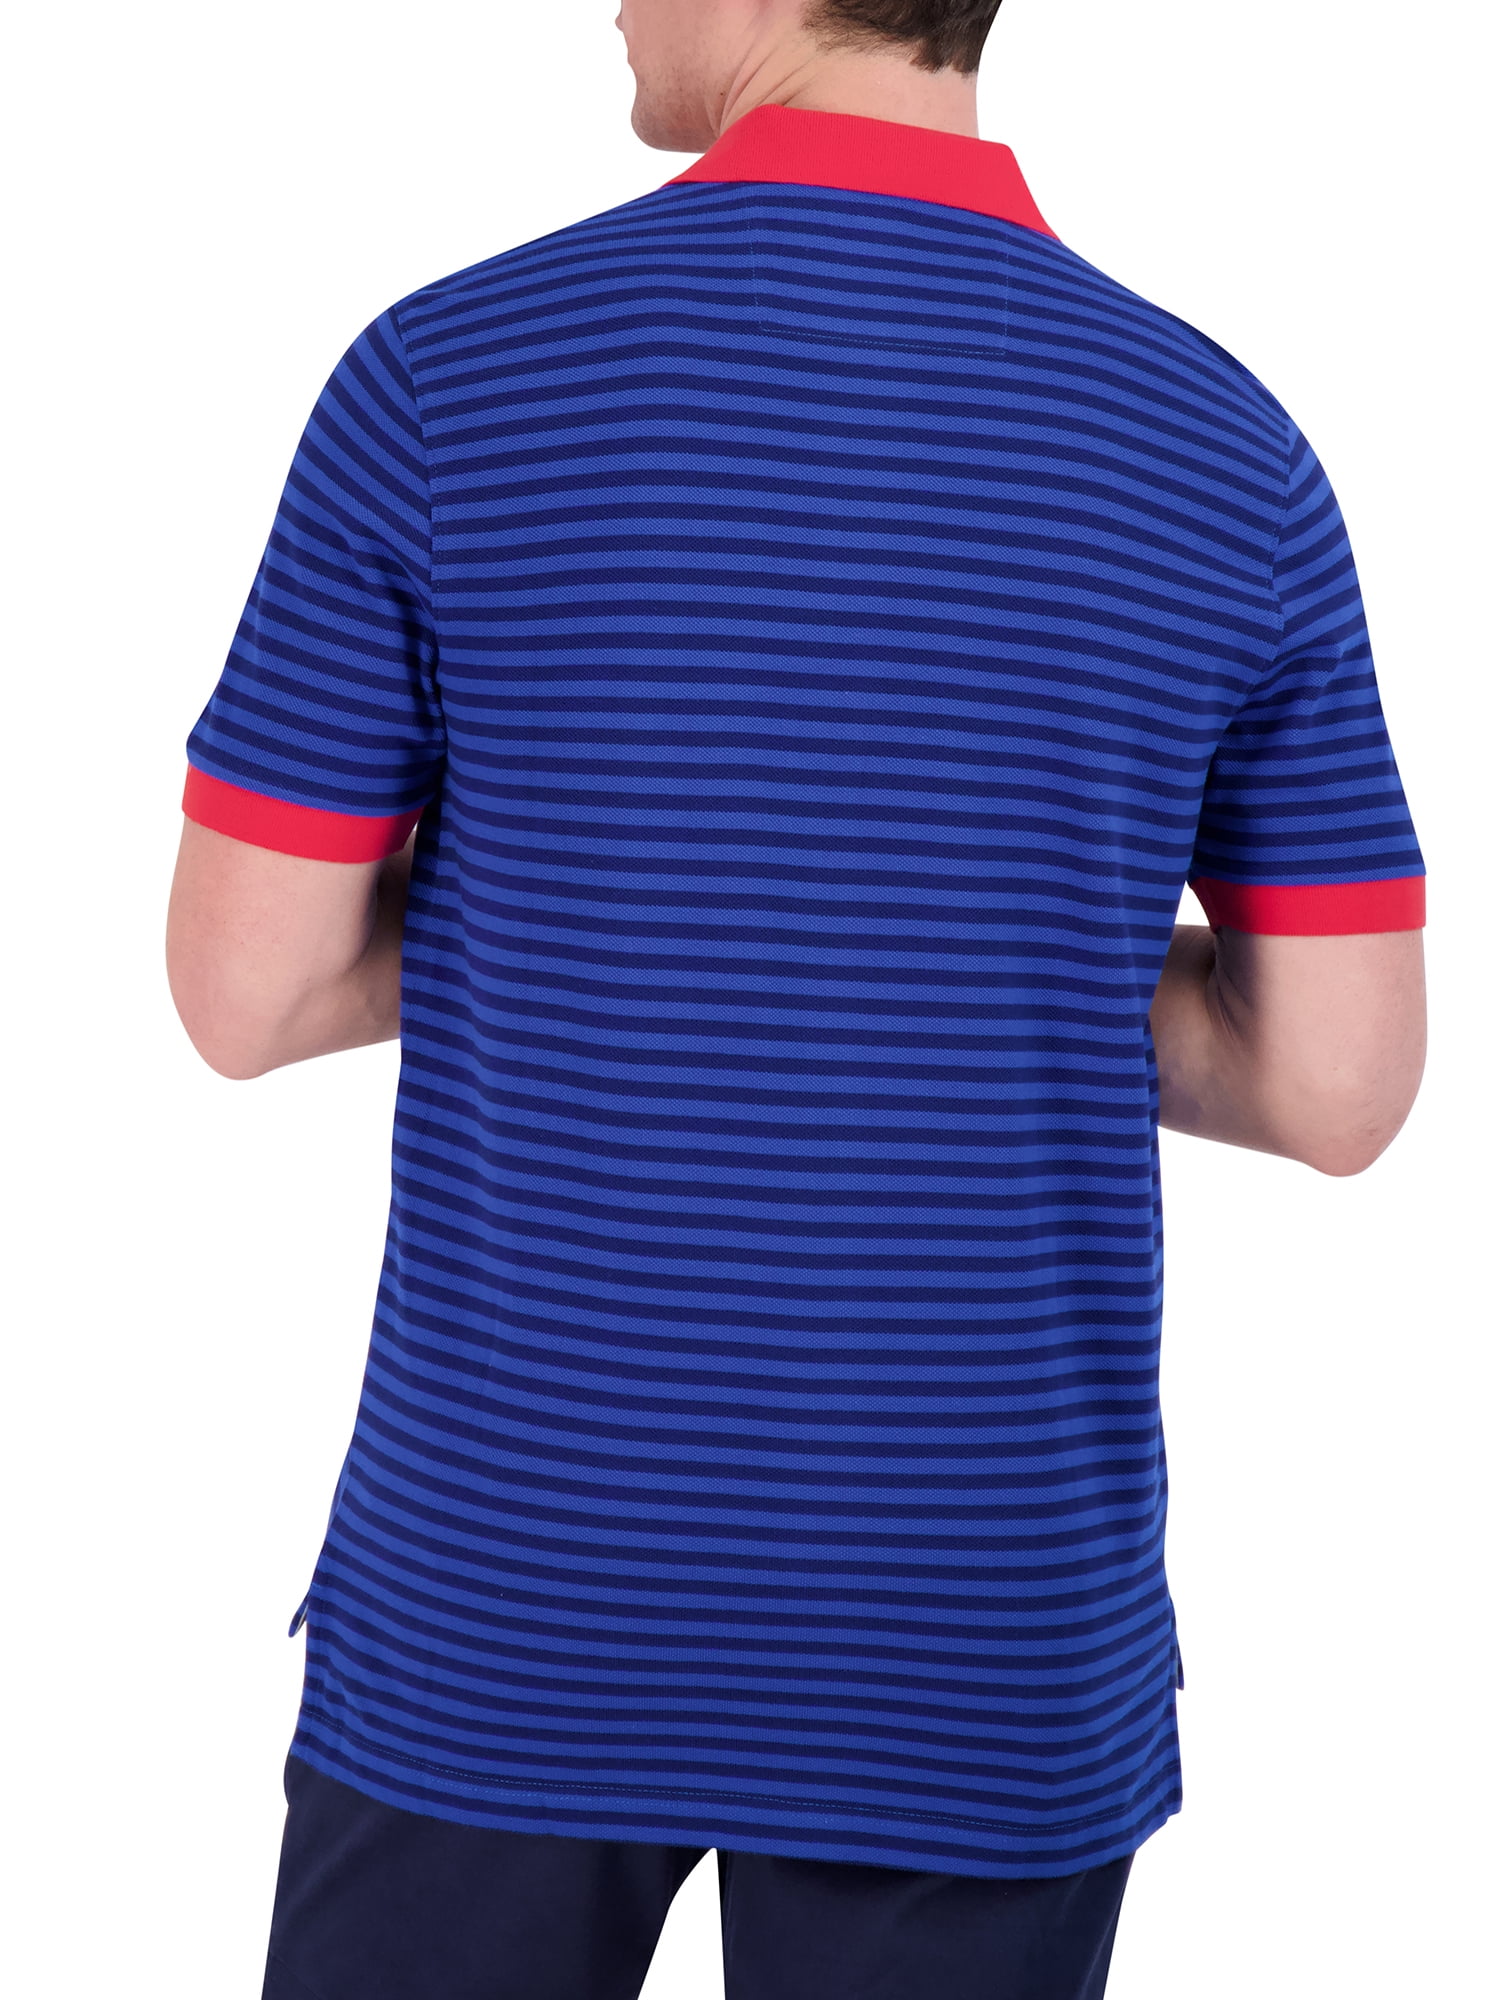 Mens Classic Polo Shirt 100% Cotton Short Sleeve Plain Pique Collared Tee Top 